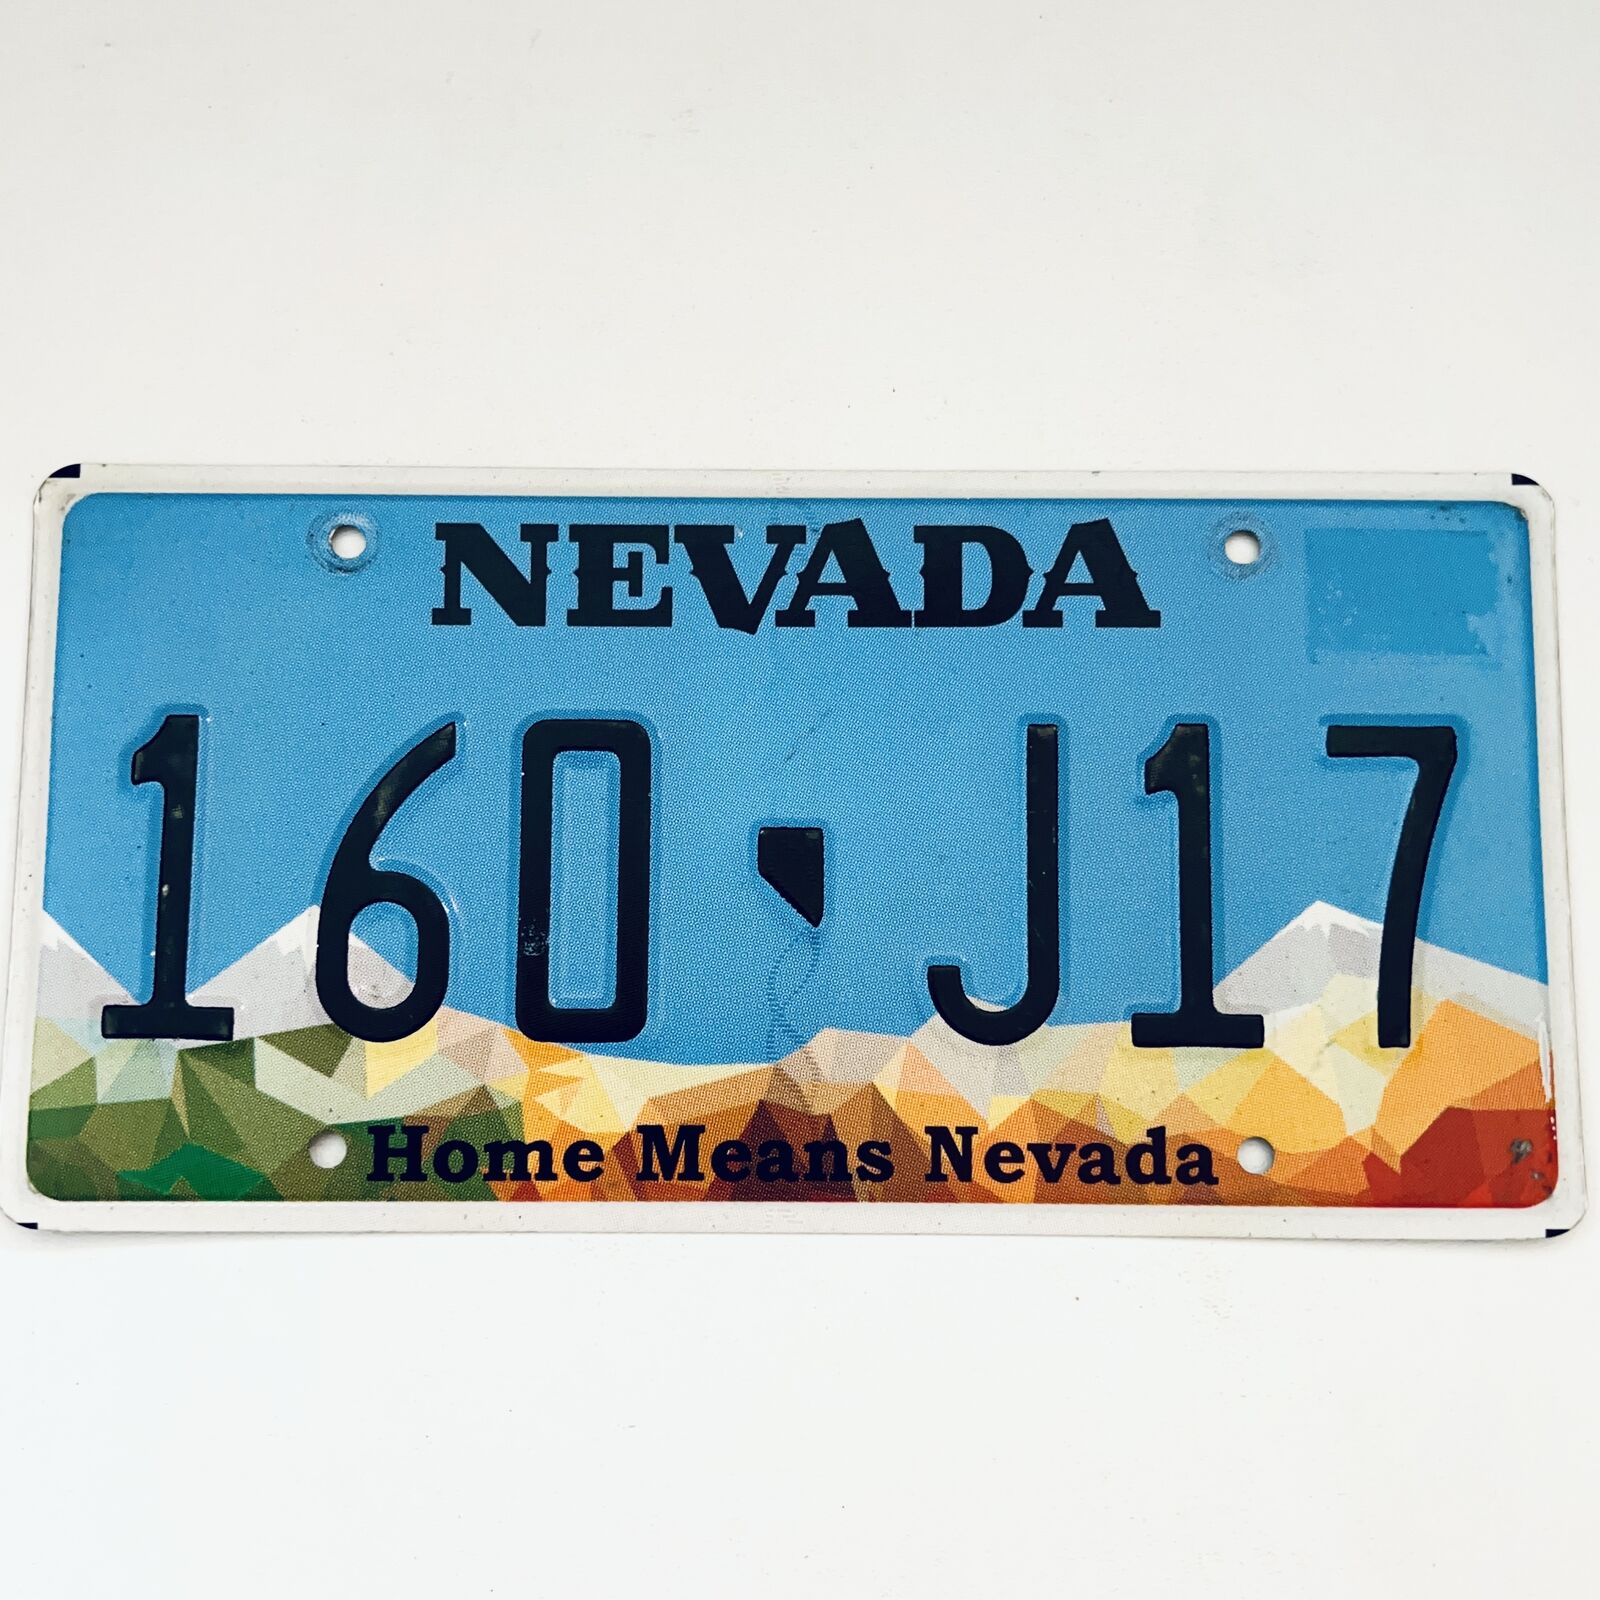  United States Nevada Home Means Nevada Passenger License Plate 160 J17